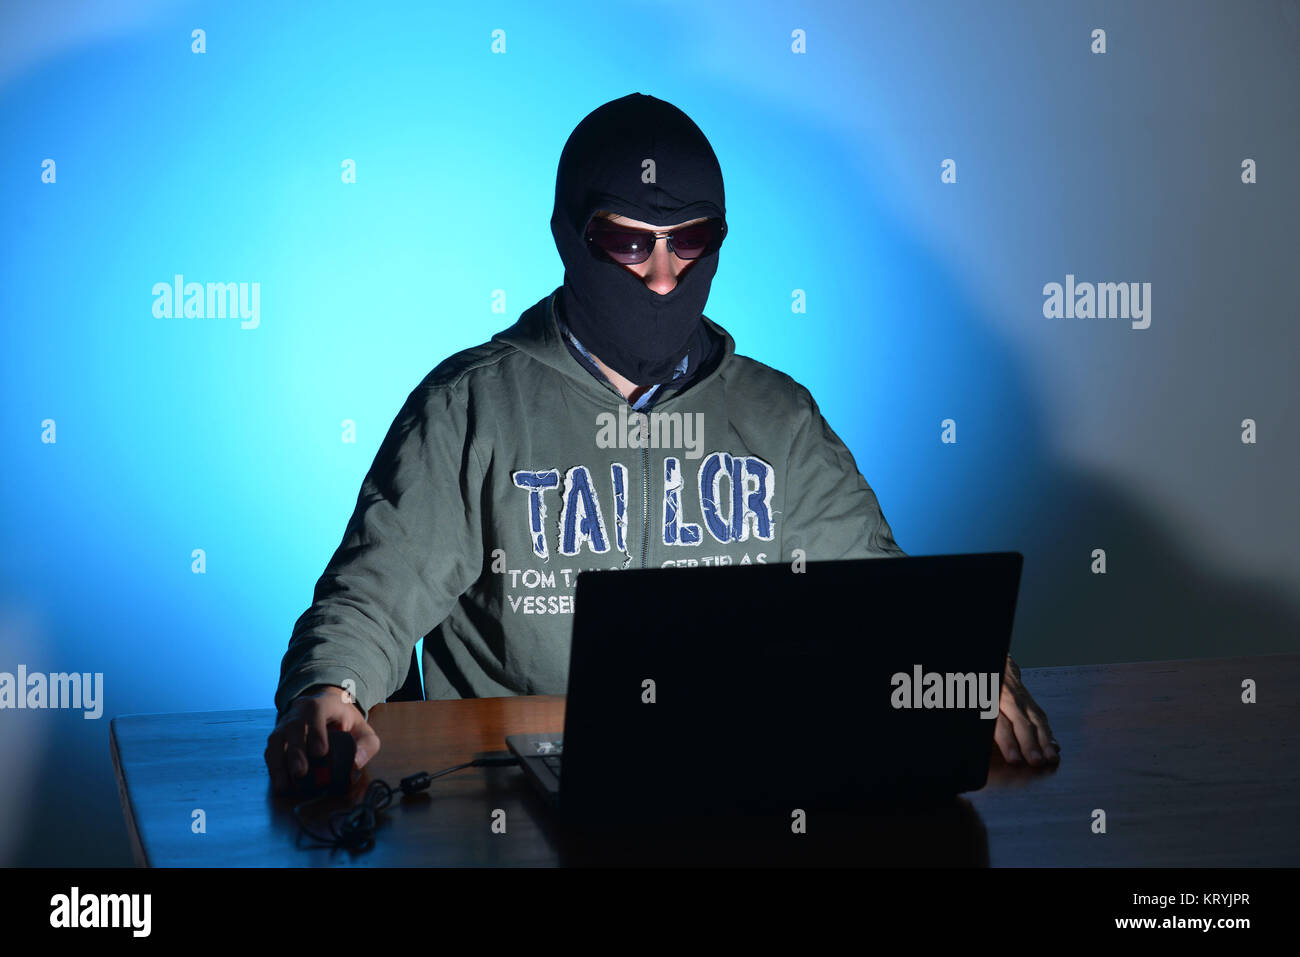 Foto simbolico Internet attività criminali, Symbolfoto Internetkriminalitaet Foto Stock